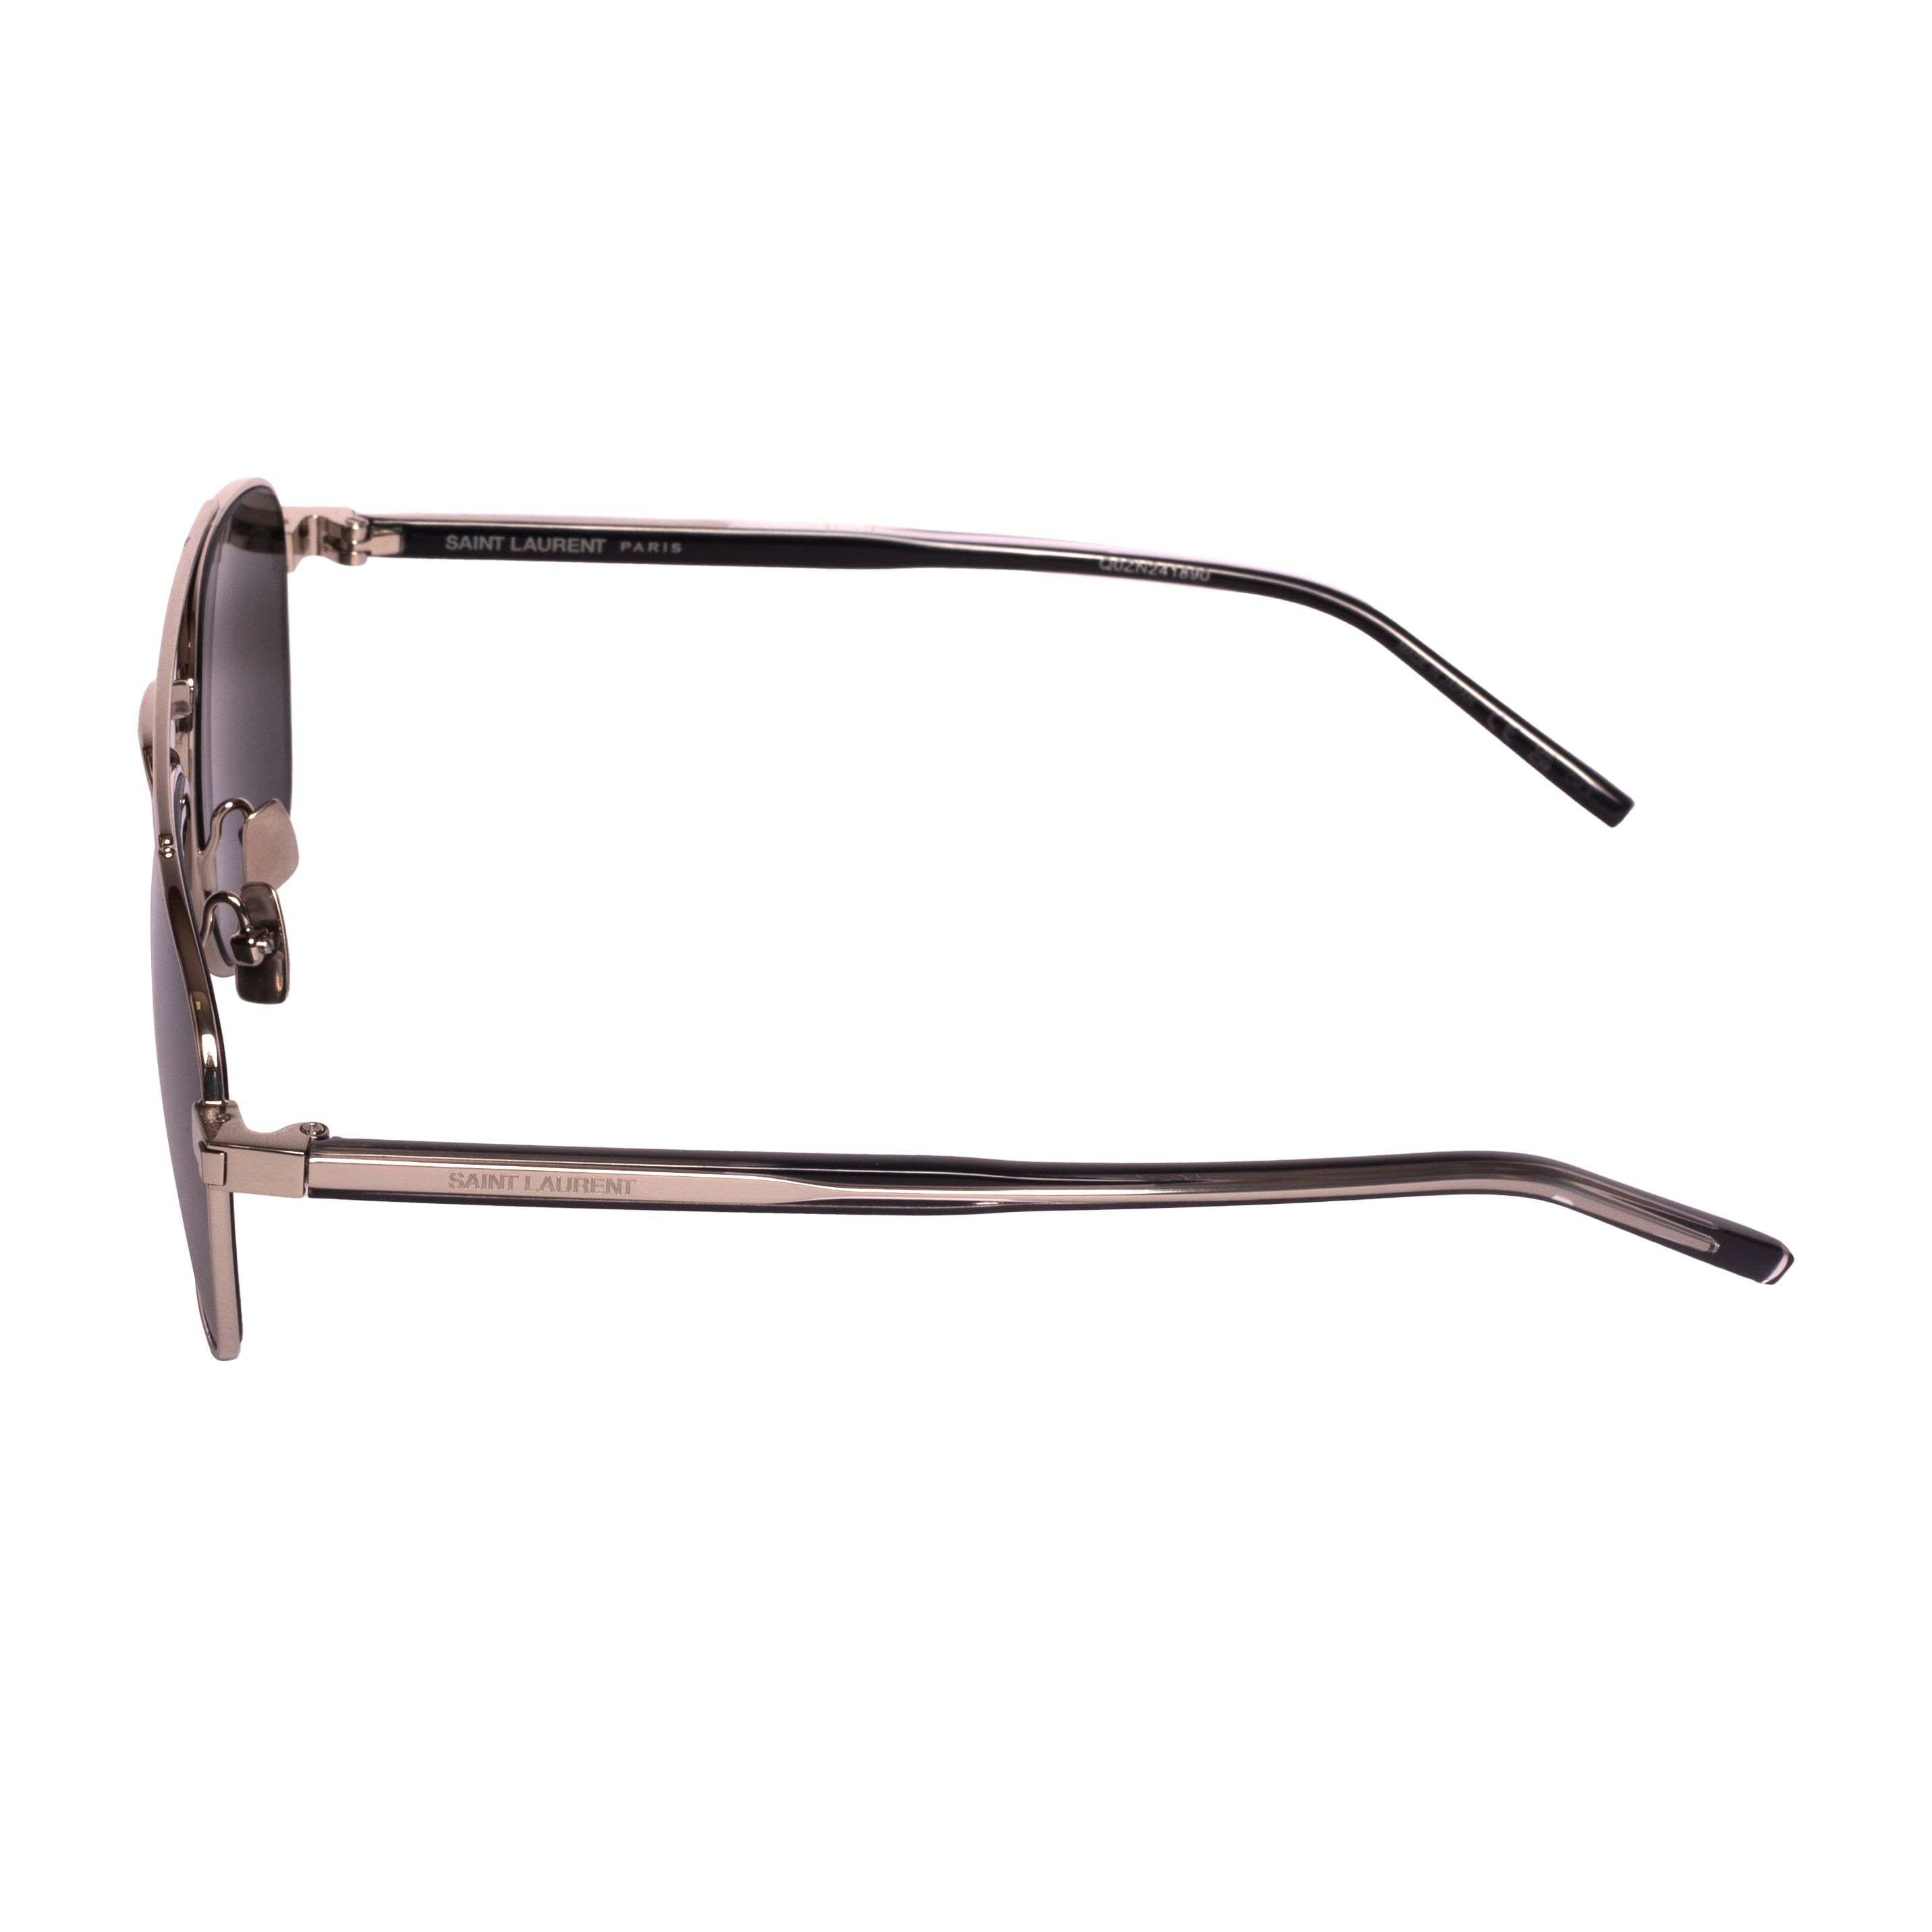 Saint Laurent-SL 665-56-002 Sunglasses - Premium Sunglasses from Saint Laurent - Just Rs. 28720! Shop now at Laxmi Opticians